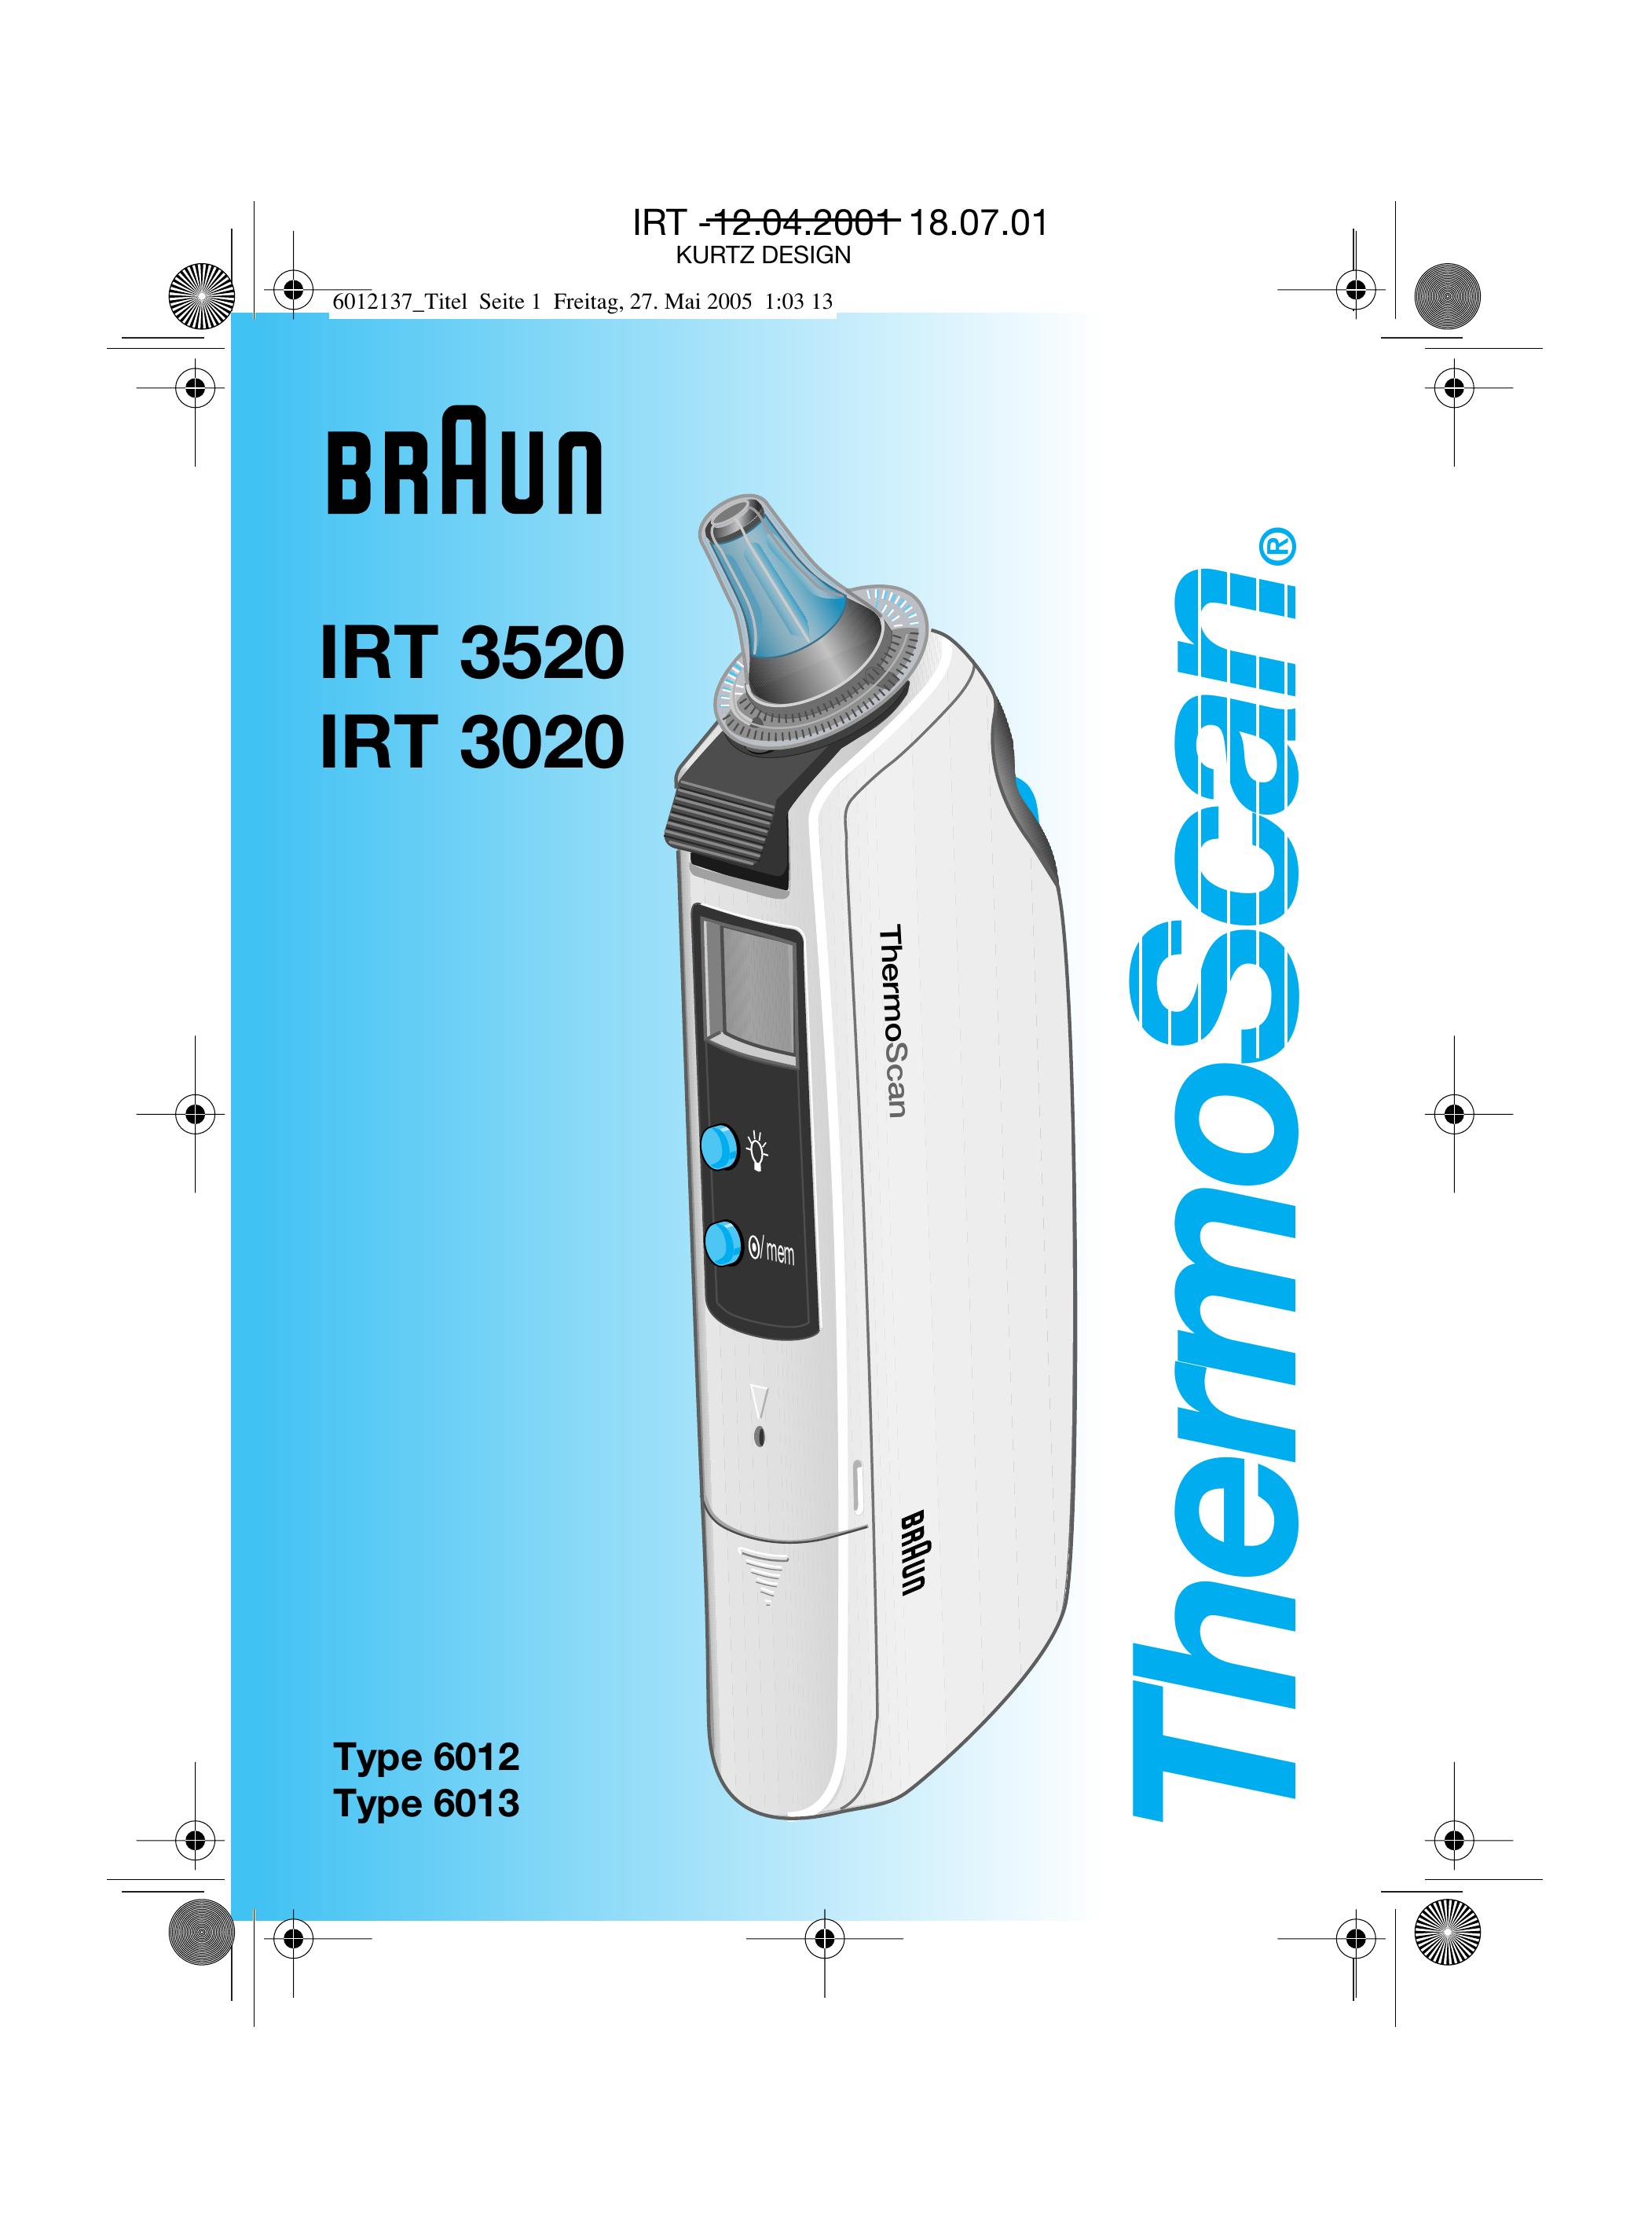 Braun IRT 3520 Thermometer User Manual